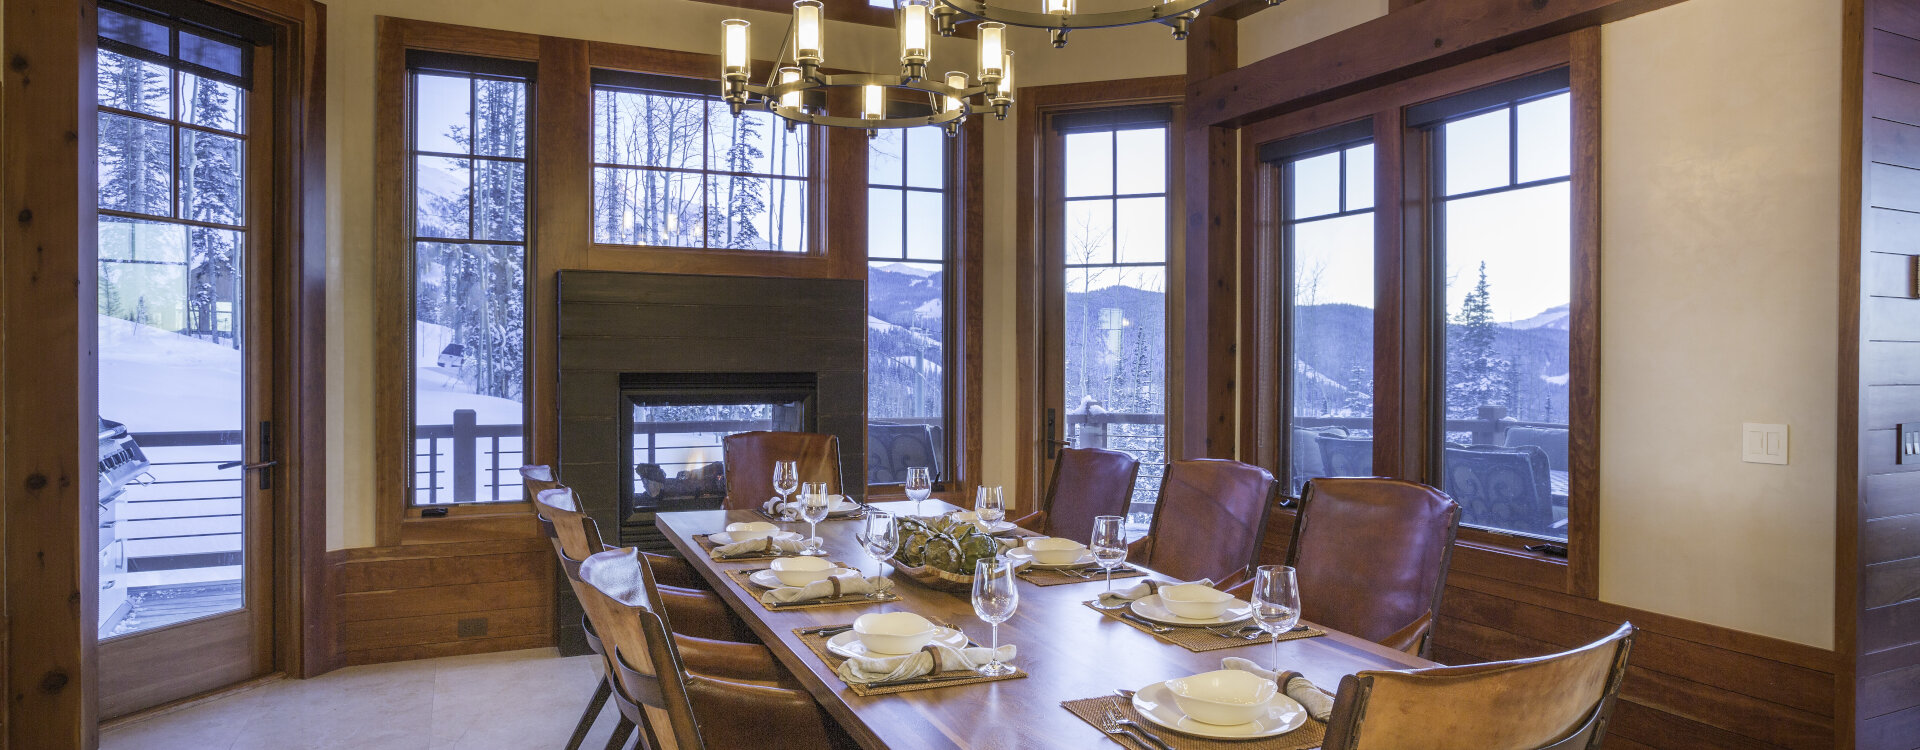 2.02-telluride-cabin-on-the-ridge-dining-room-fireplace